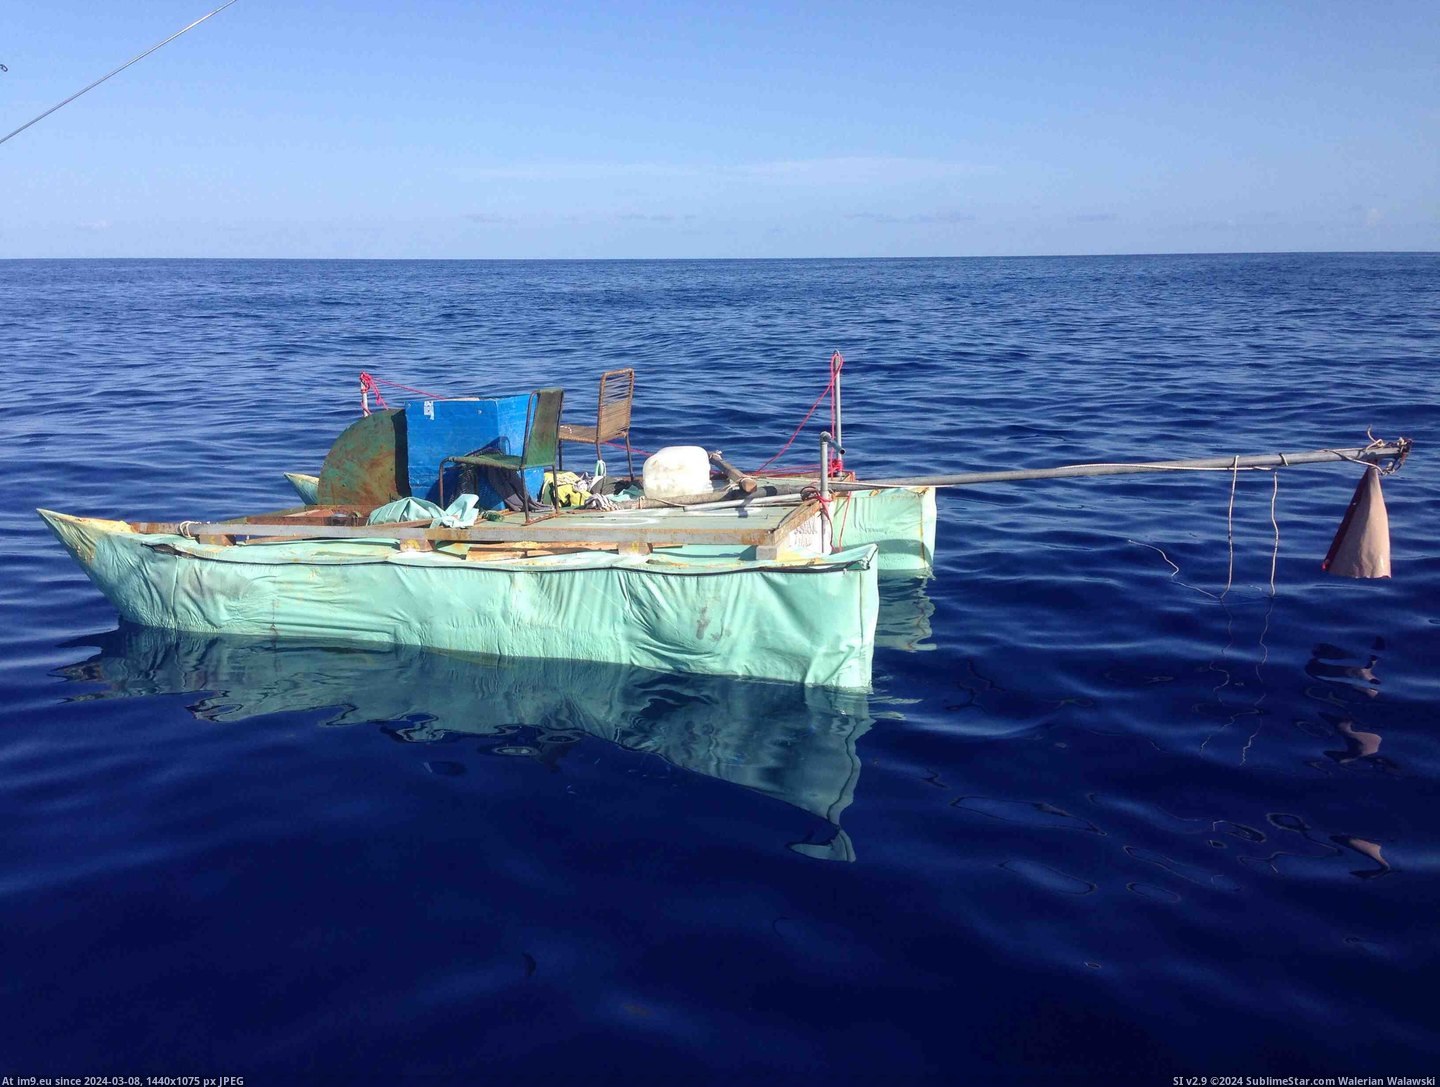 #Sea #Abandoned #Cuban #Fishing #Raft [Pics] While fishing, we found an abandoned Cuban raft while at sea. Pic. (Image of album My r/PICS favs))